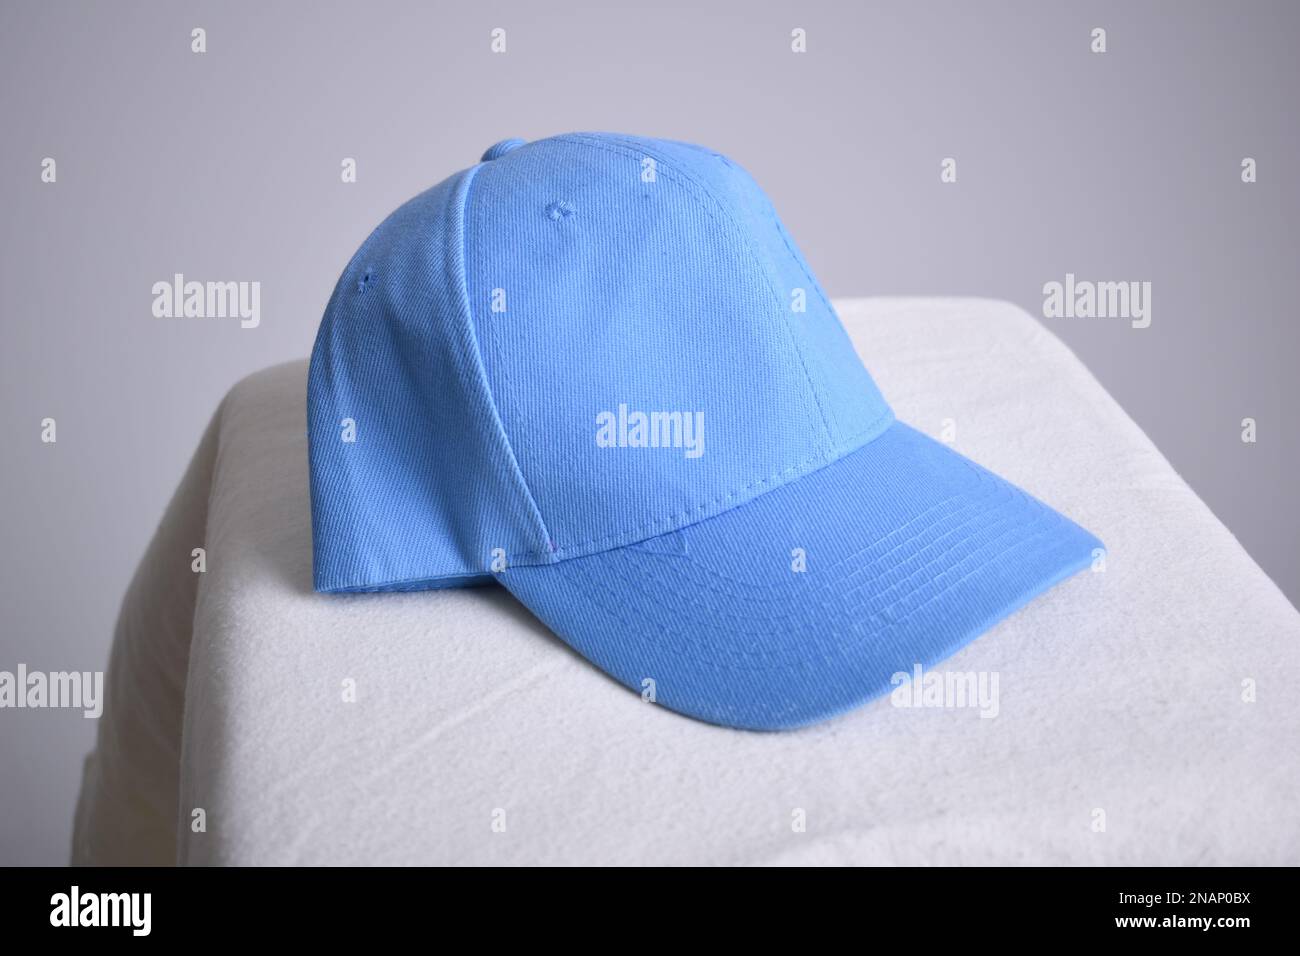 Blue cap/hat high resolution image Stock Photo